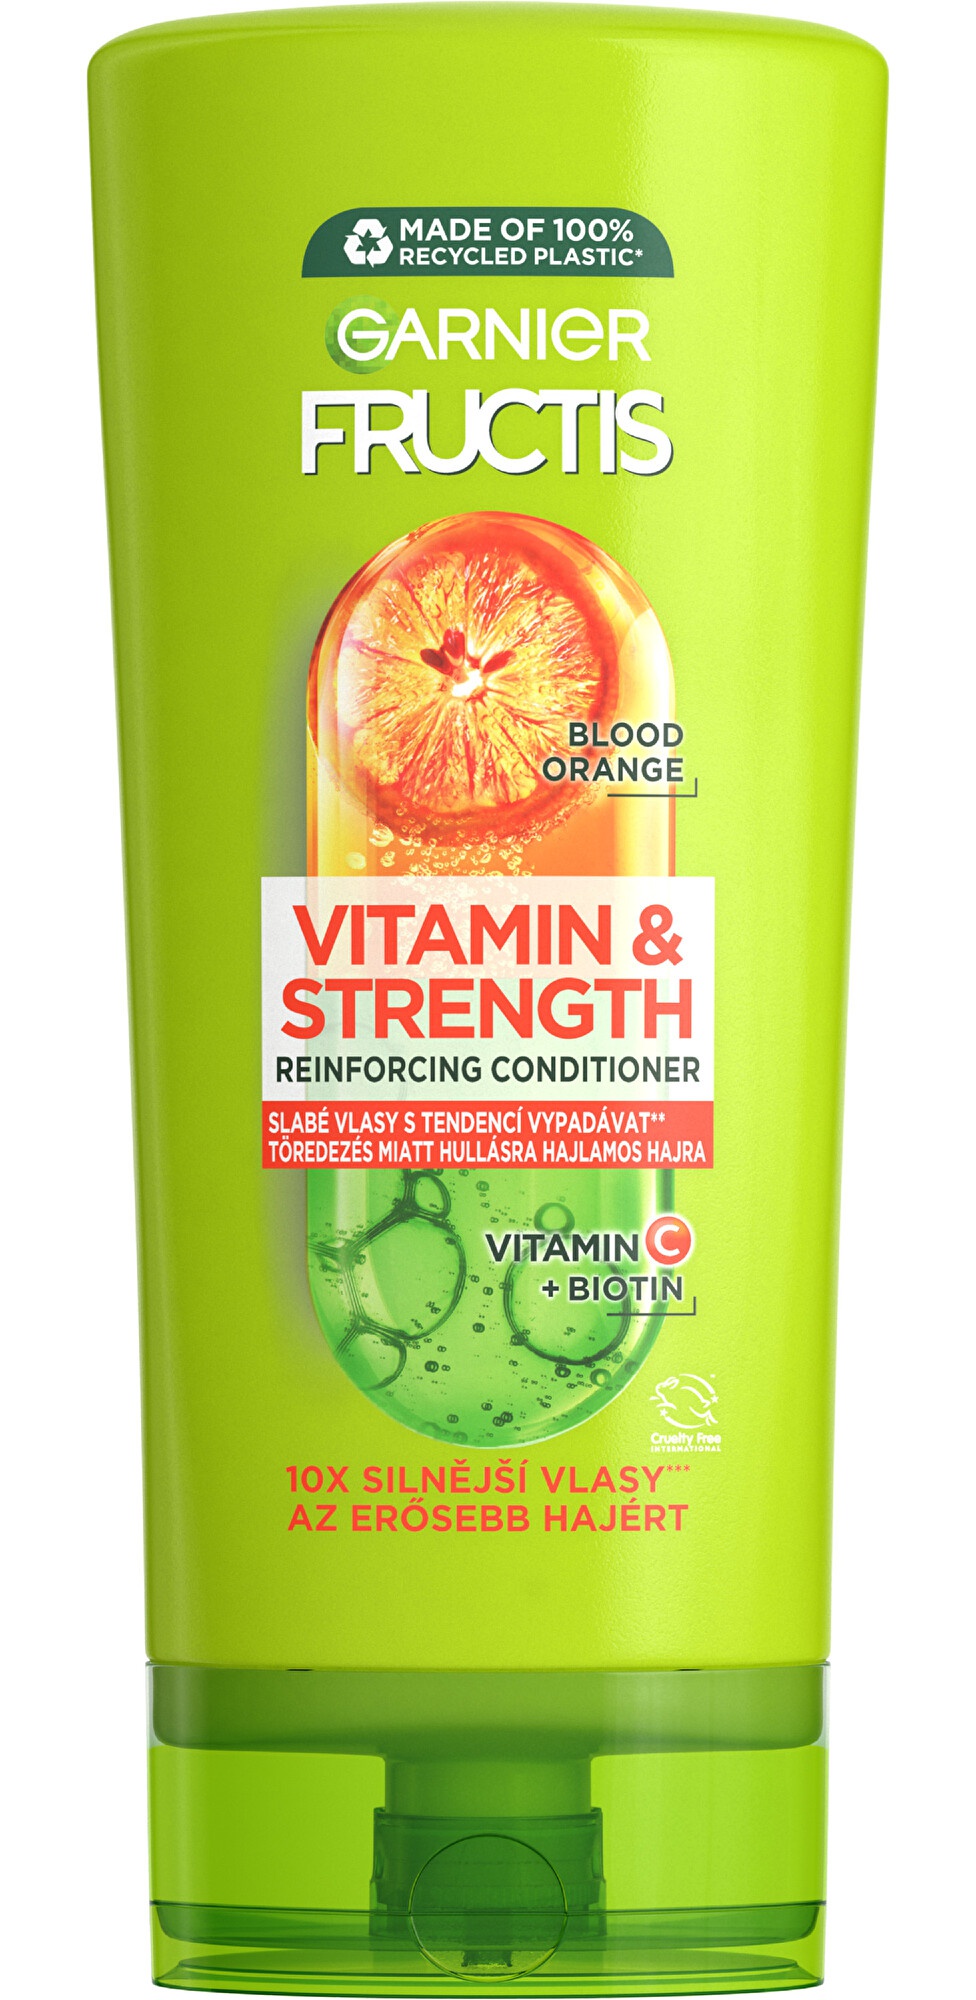 Garnier Fructis Vitamin & Strength Reinforcing Conditioner